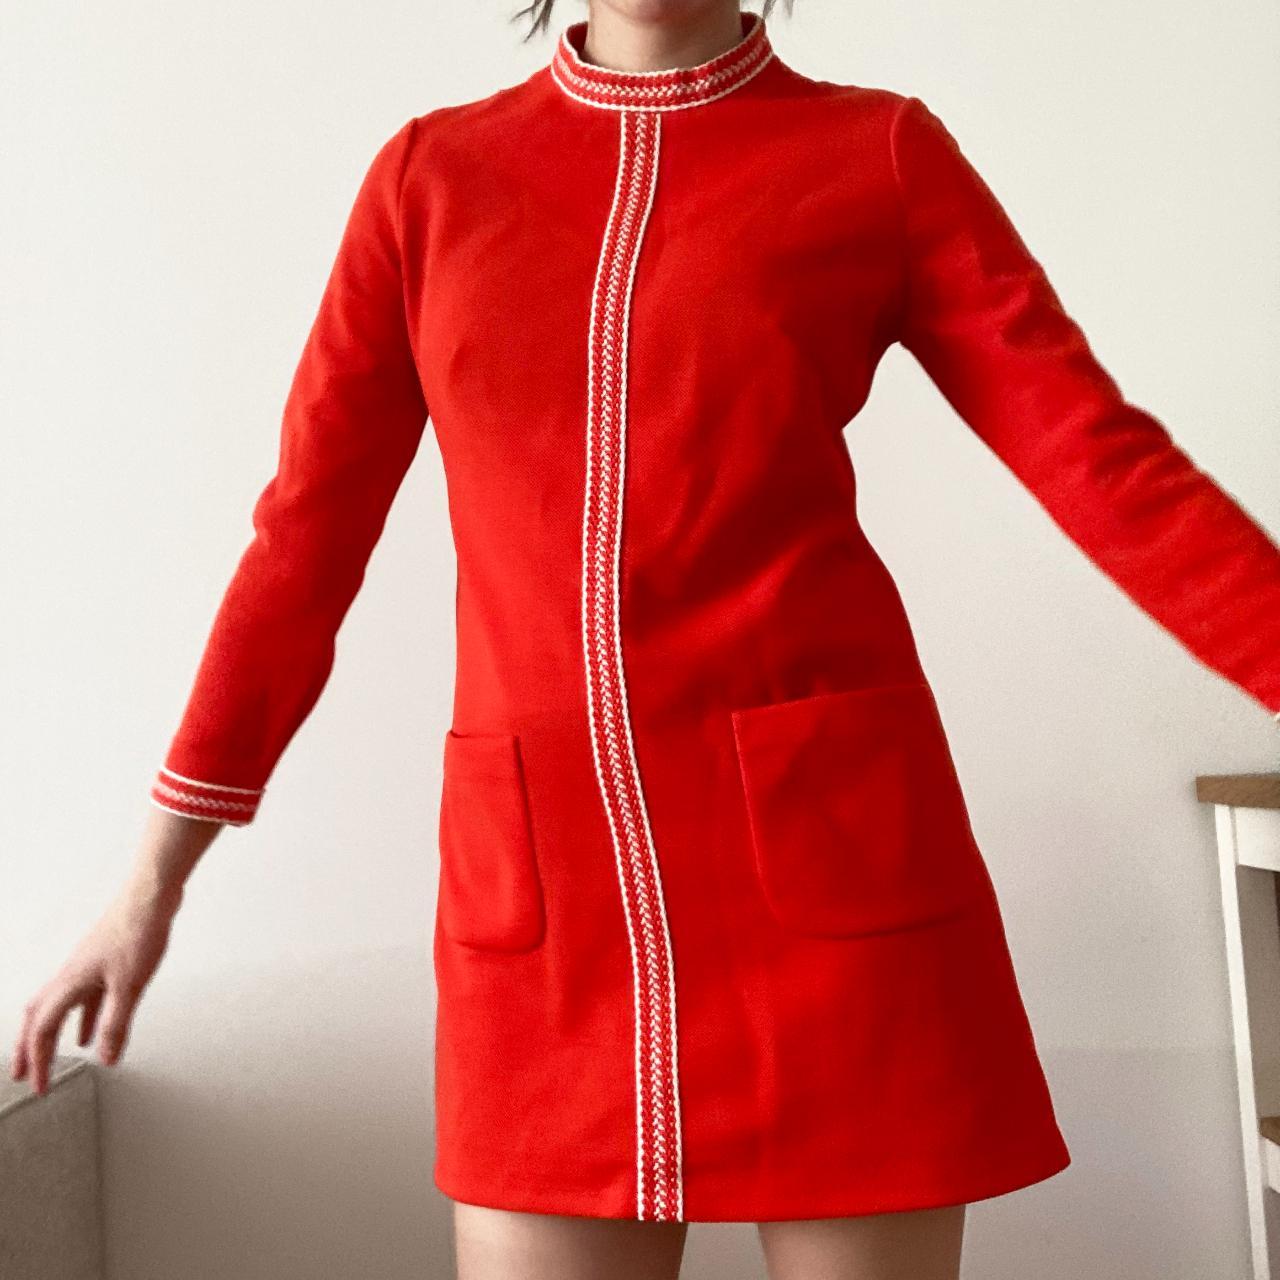 Vintage 1960's Mini Shift Dress 🌹 Size 6 /... - Depop